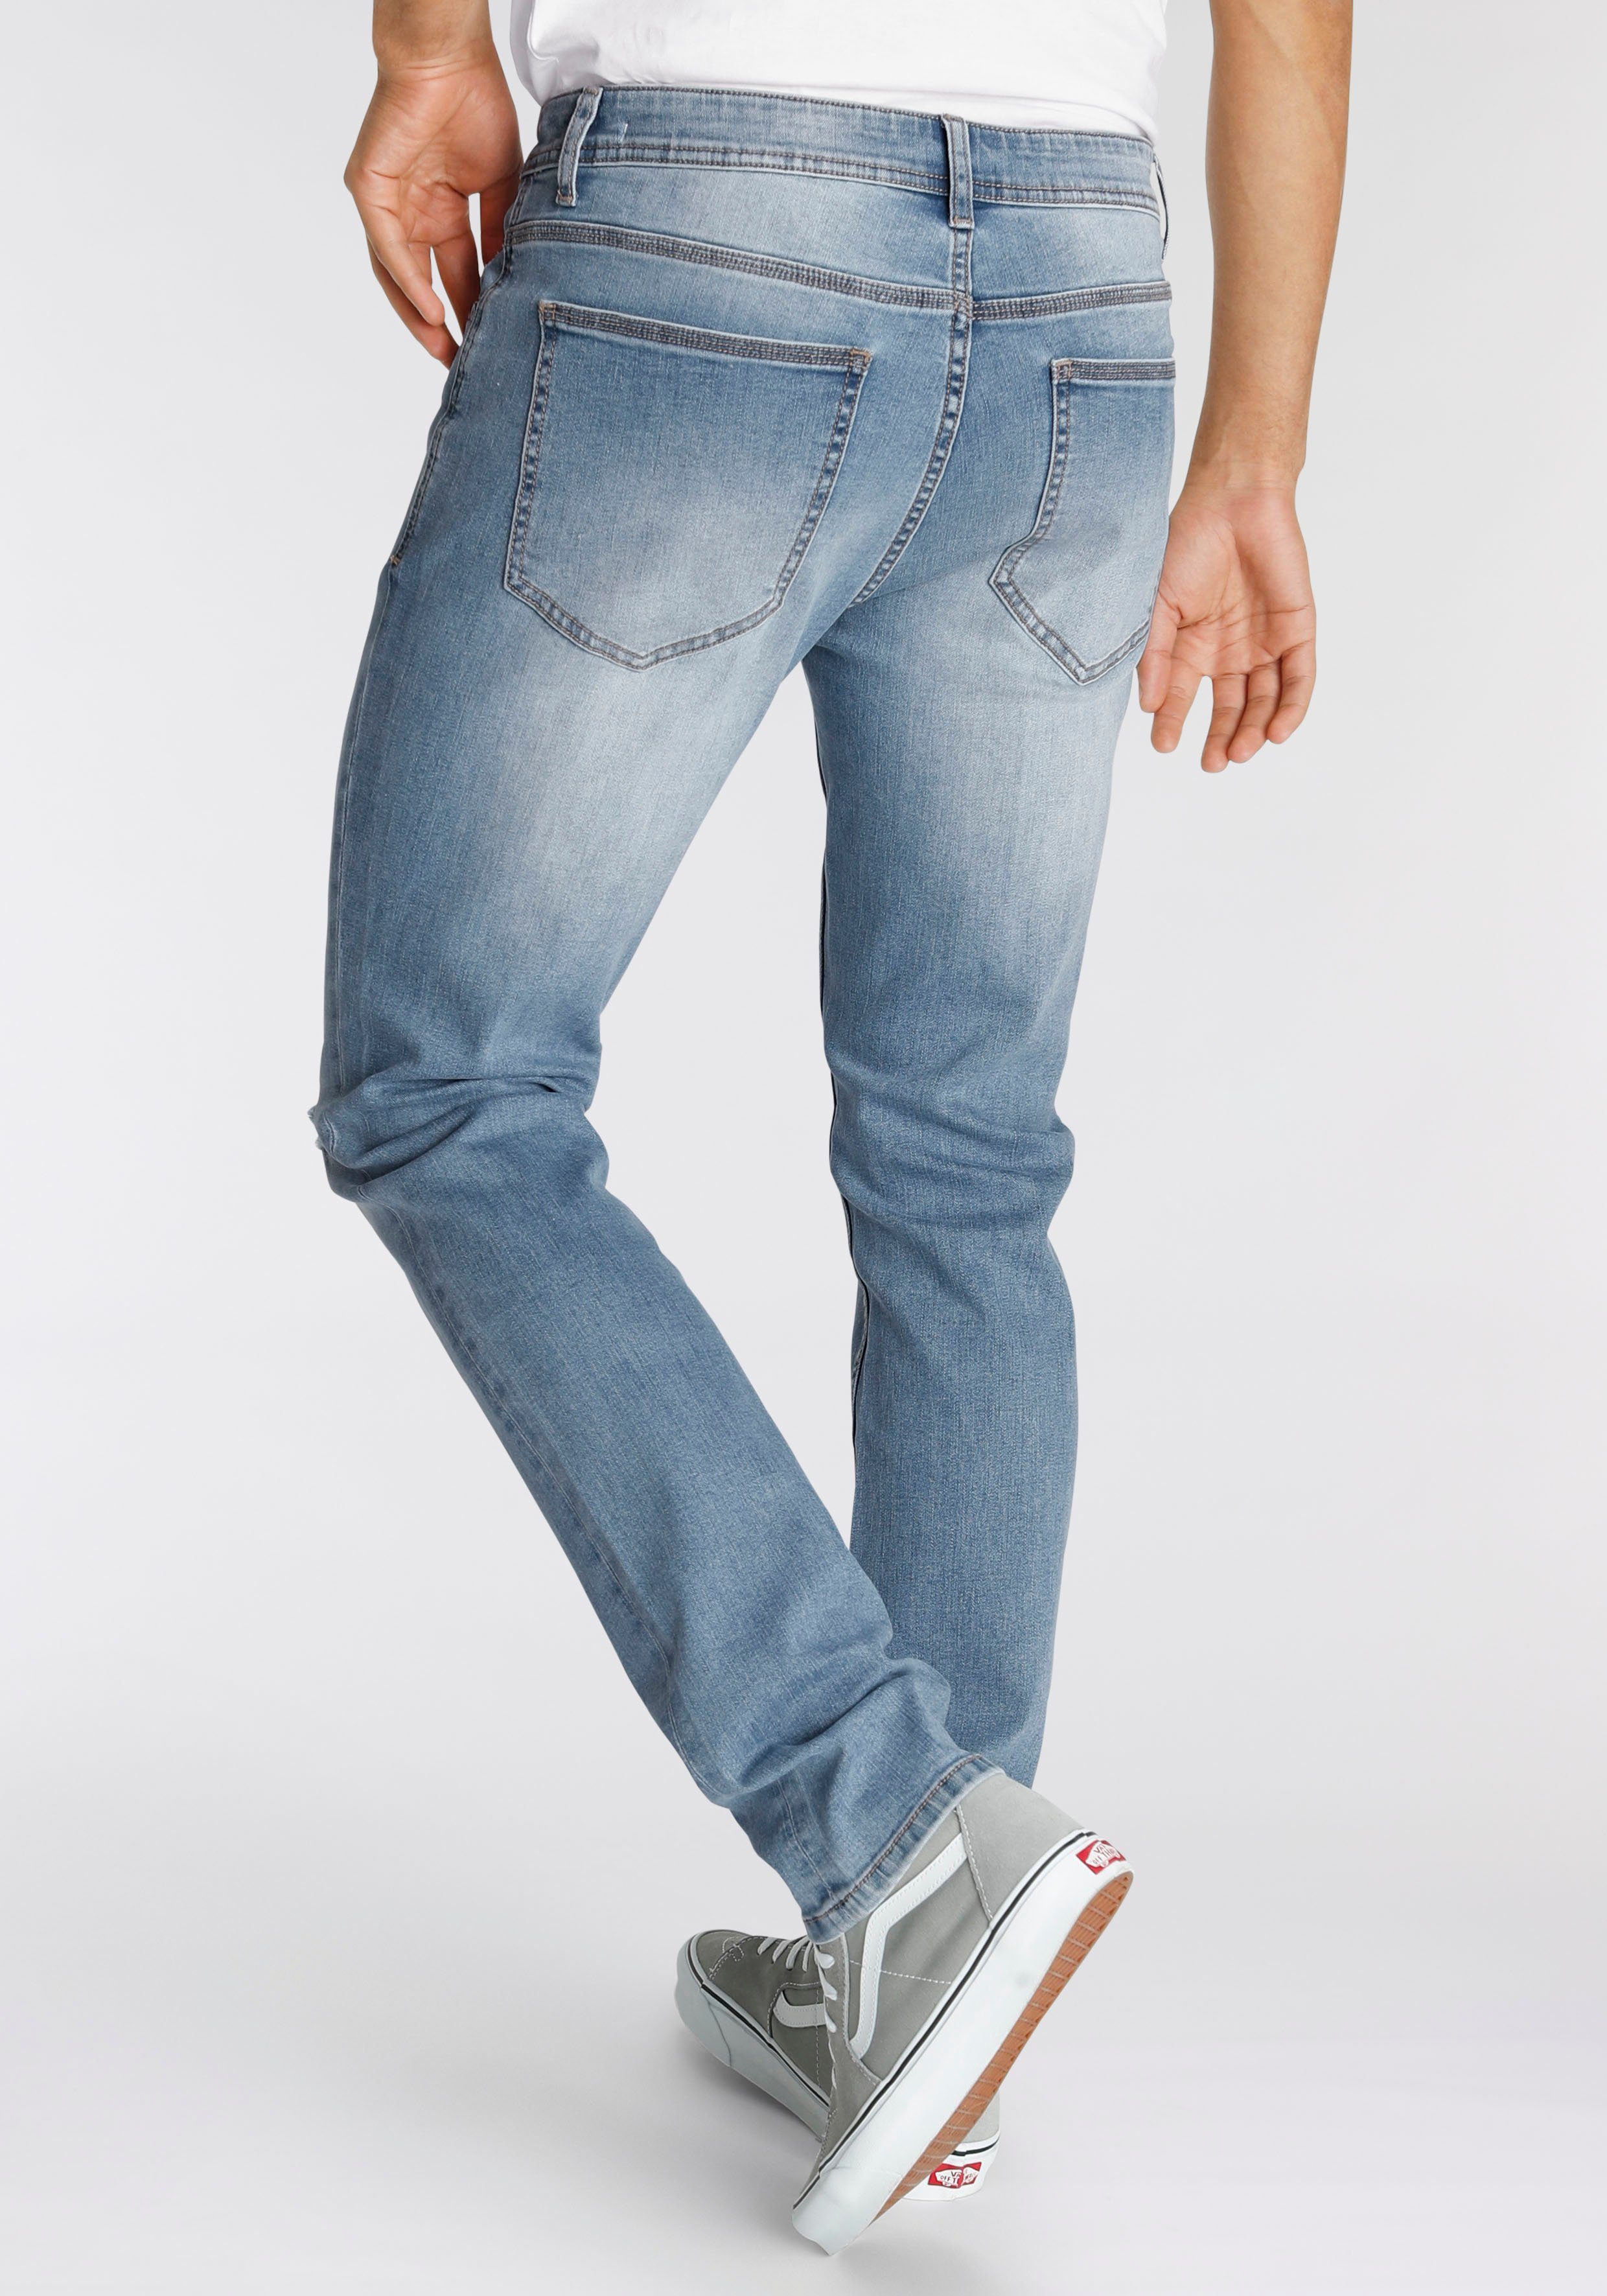 AJC Straight-Jeans mit Abriebeffekten light an Beinen den blue